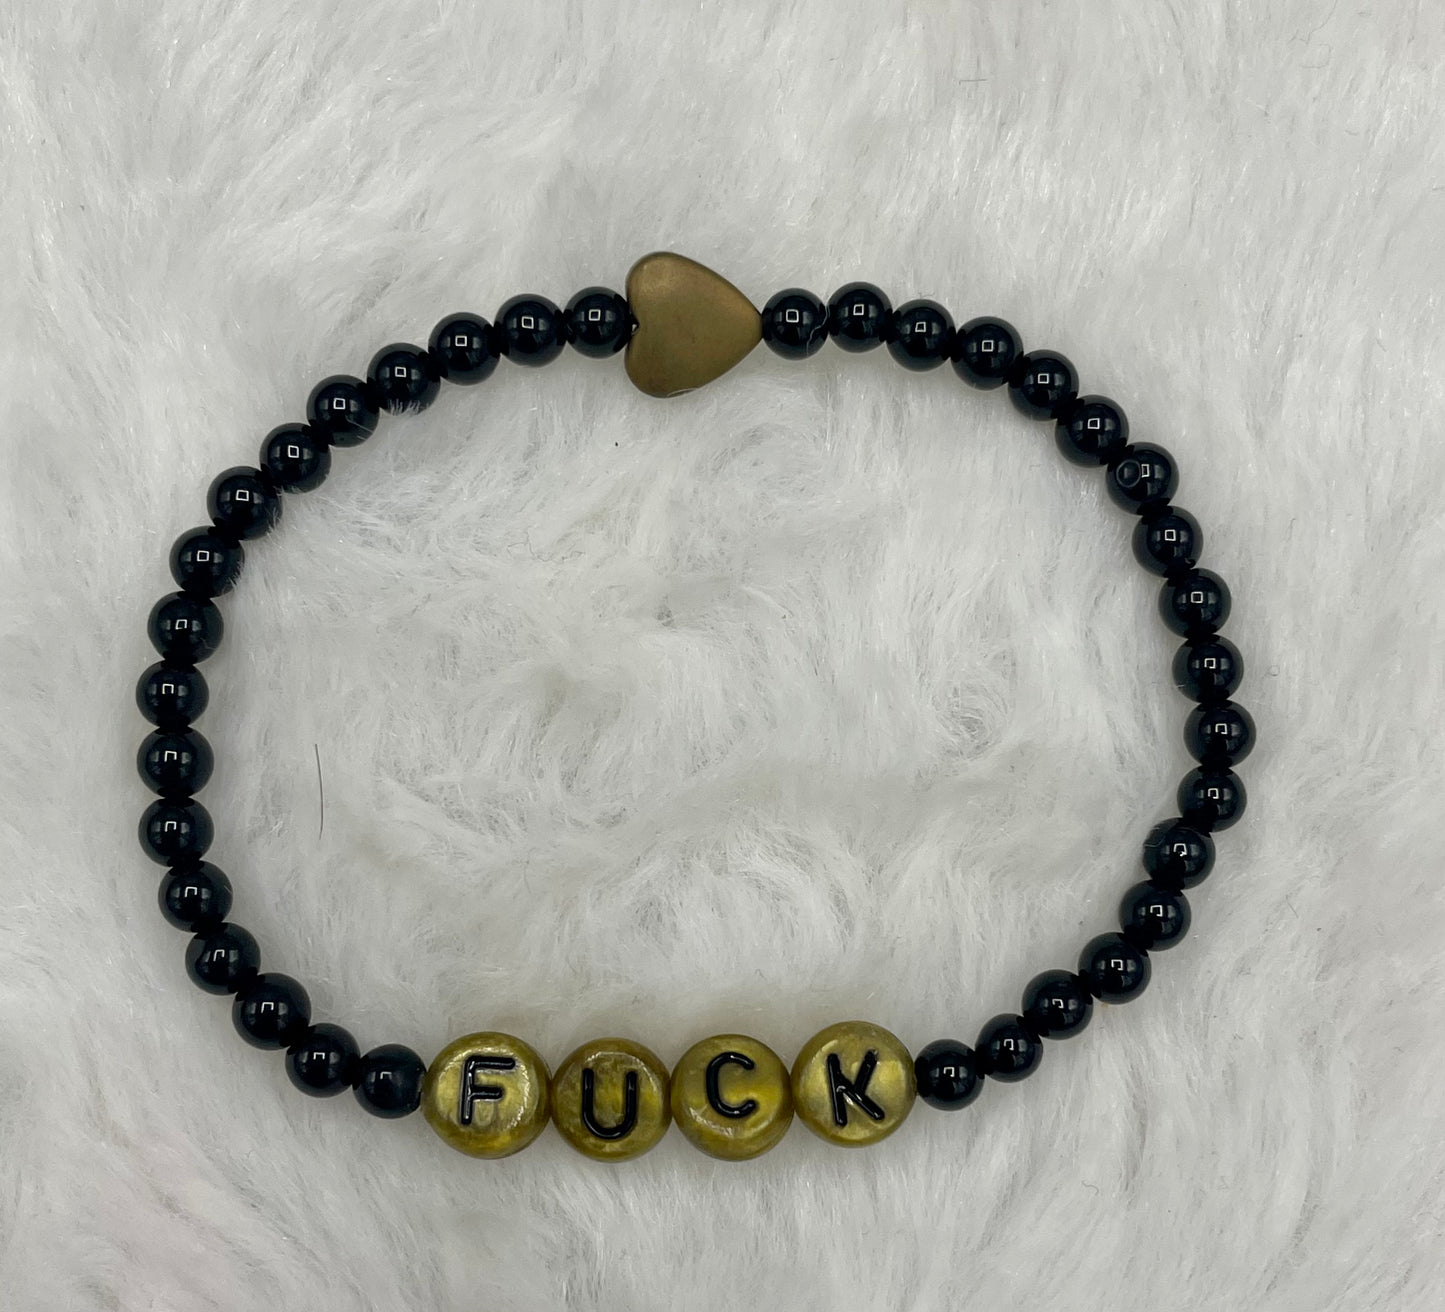 Onyx “Fuck” Bracelet